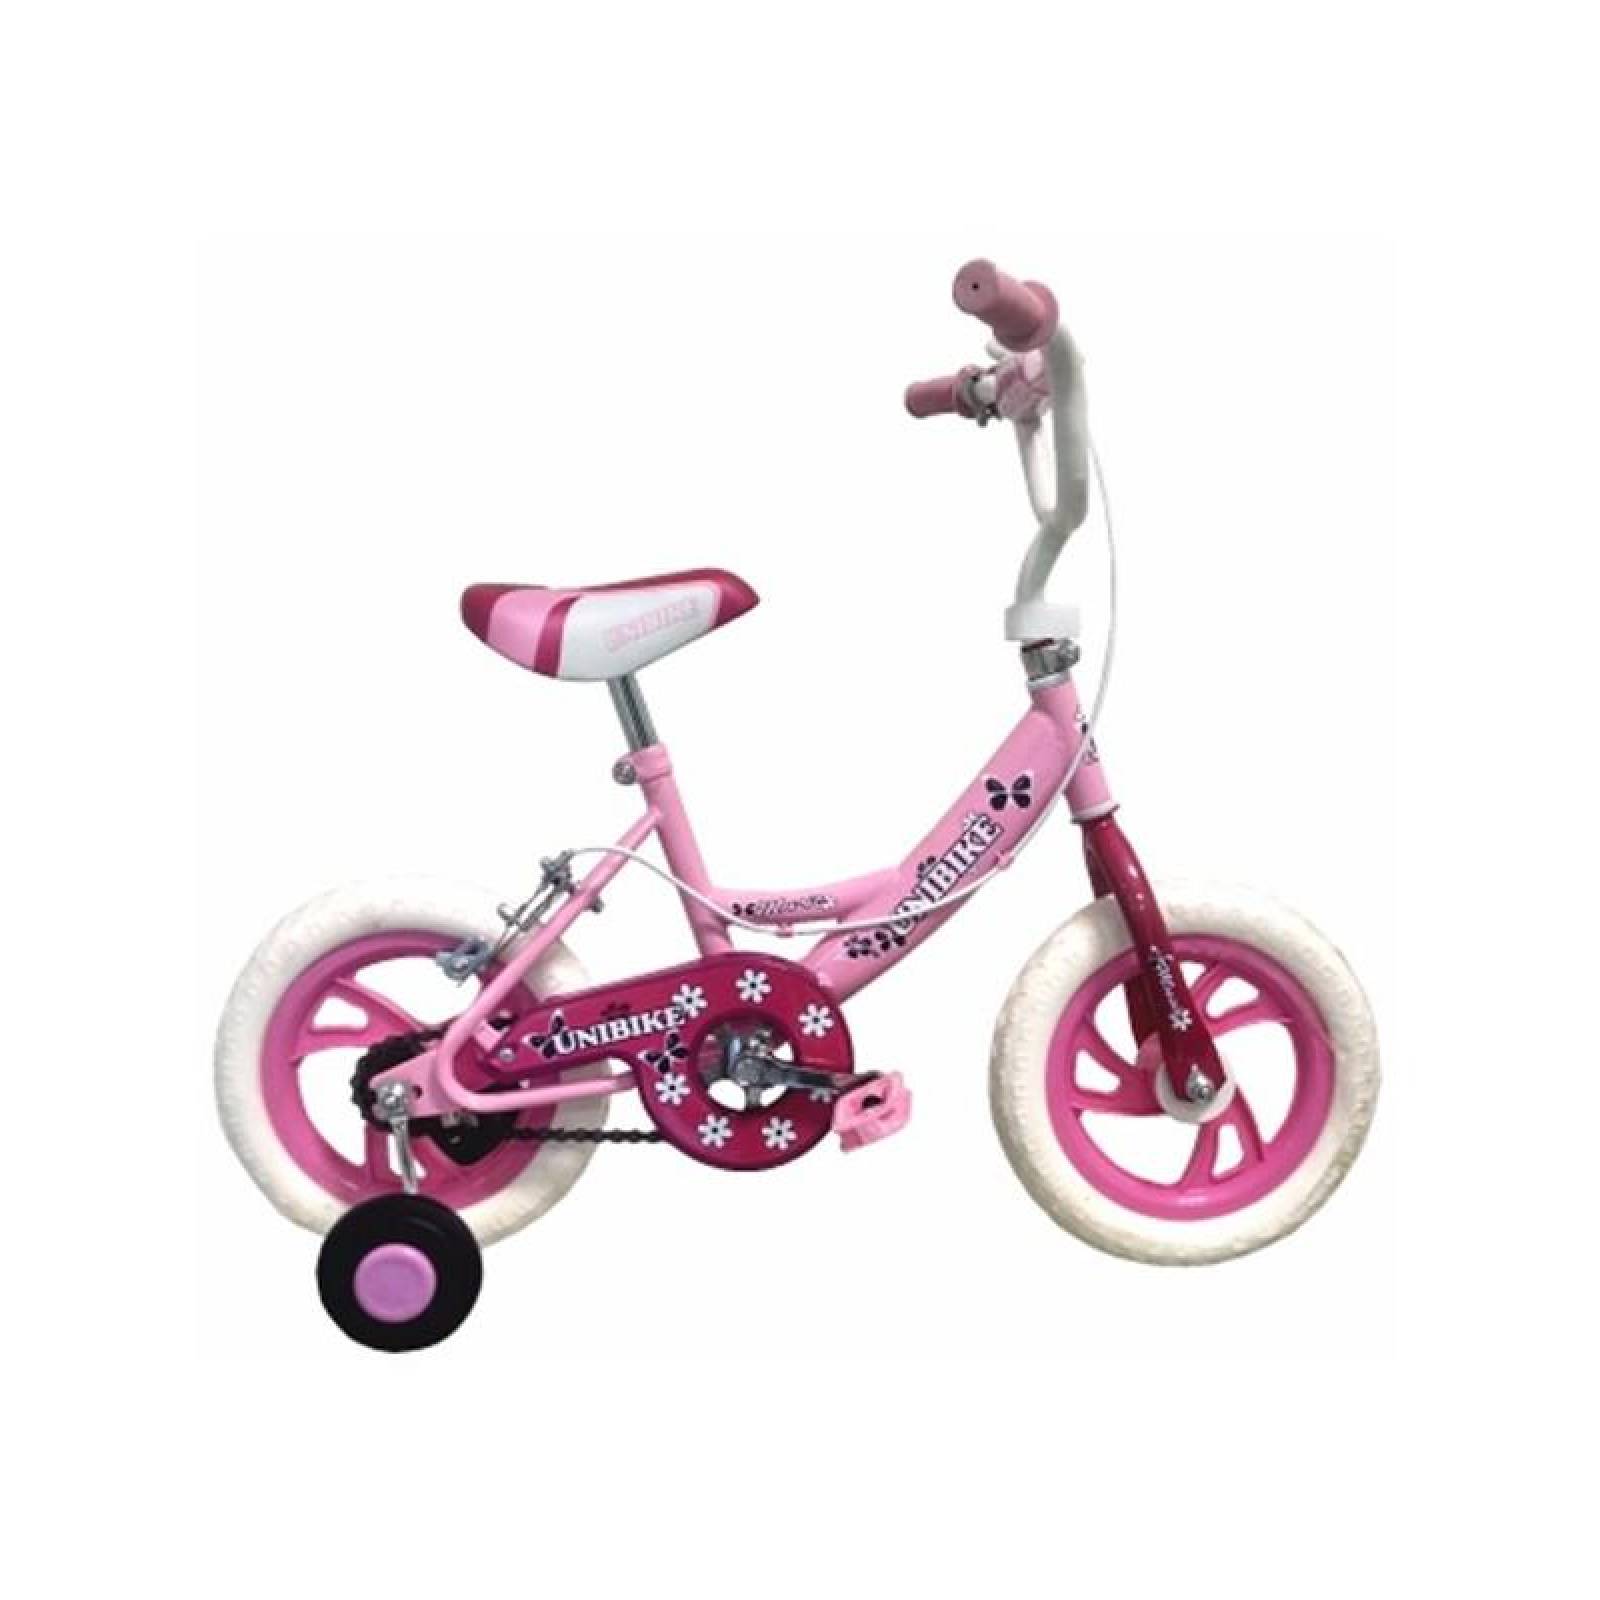 Bicicleta Infantil r12 Rodada 12 para niña Bicicletas Baratas Rosa